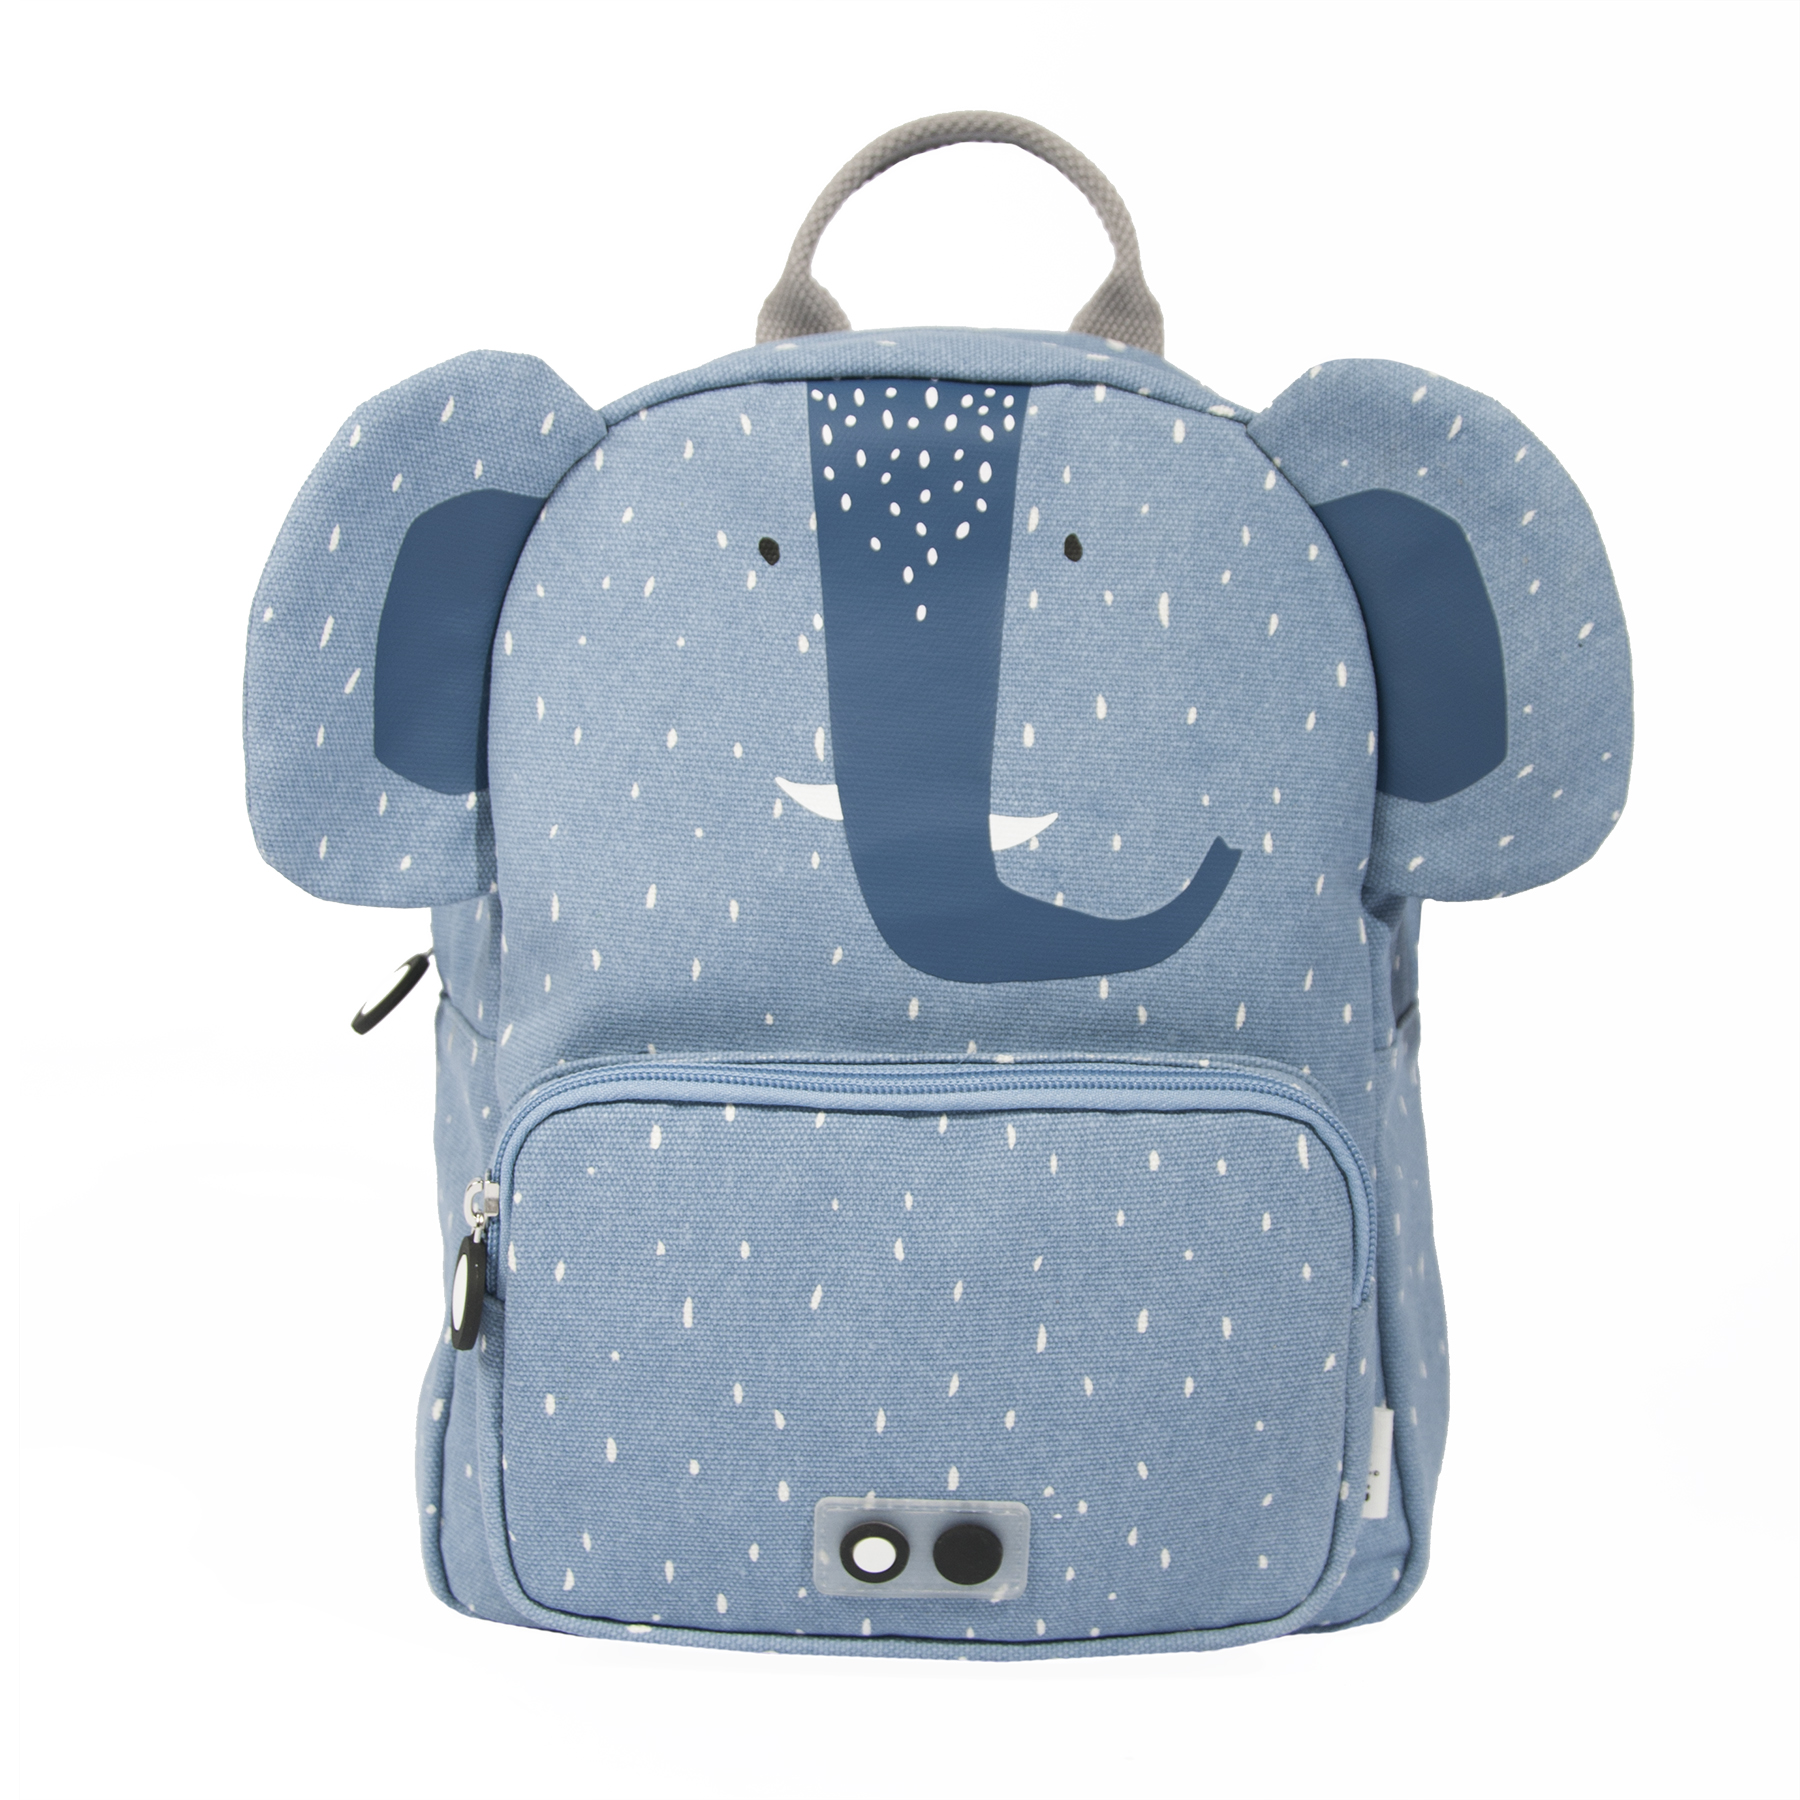 Trixie Large Mrs Elephant School Backpack